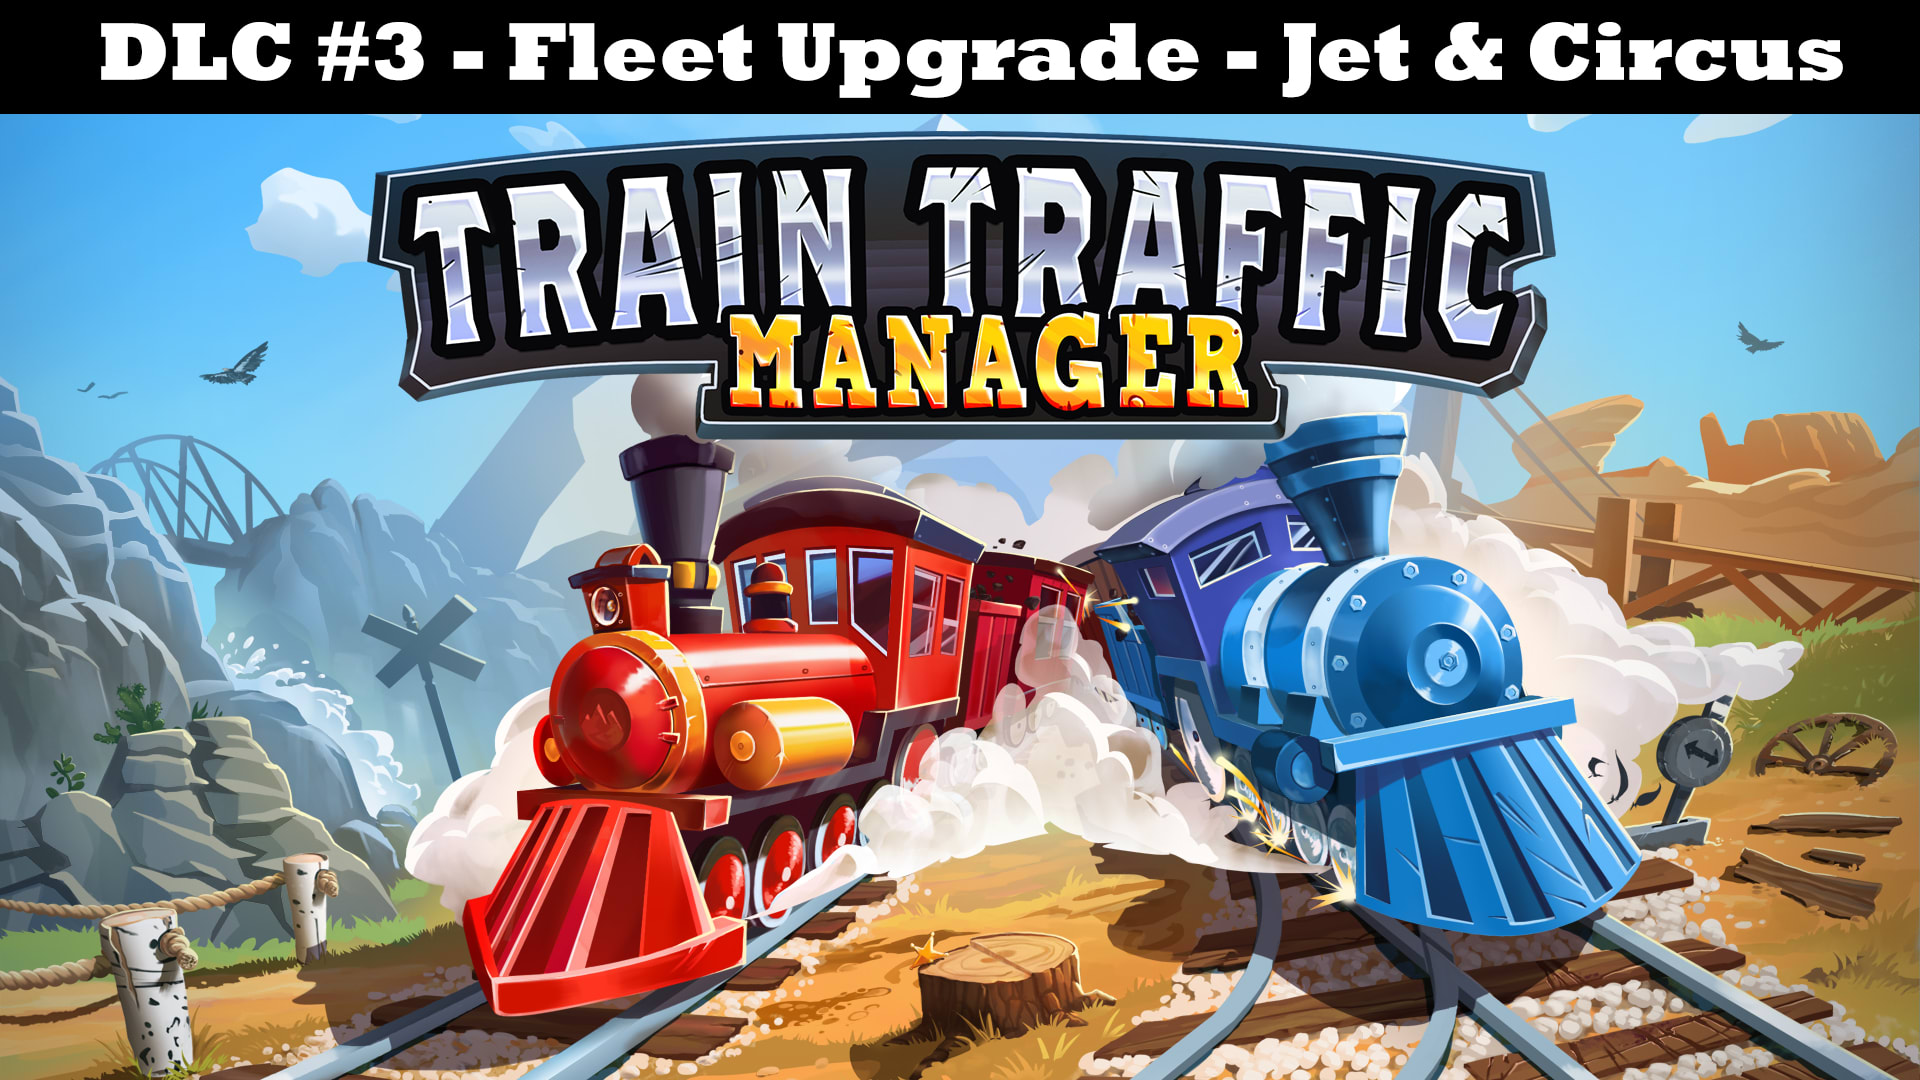 Train Traffic Manager DLC #3 - Fleet Upgrade - Jet & Circus